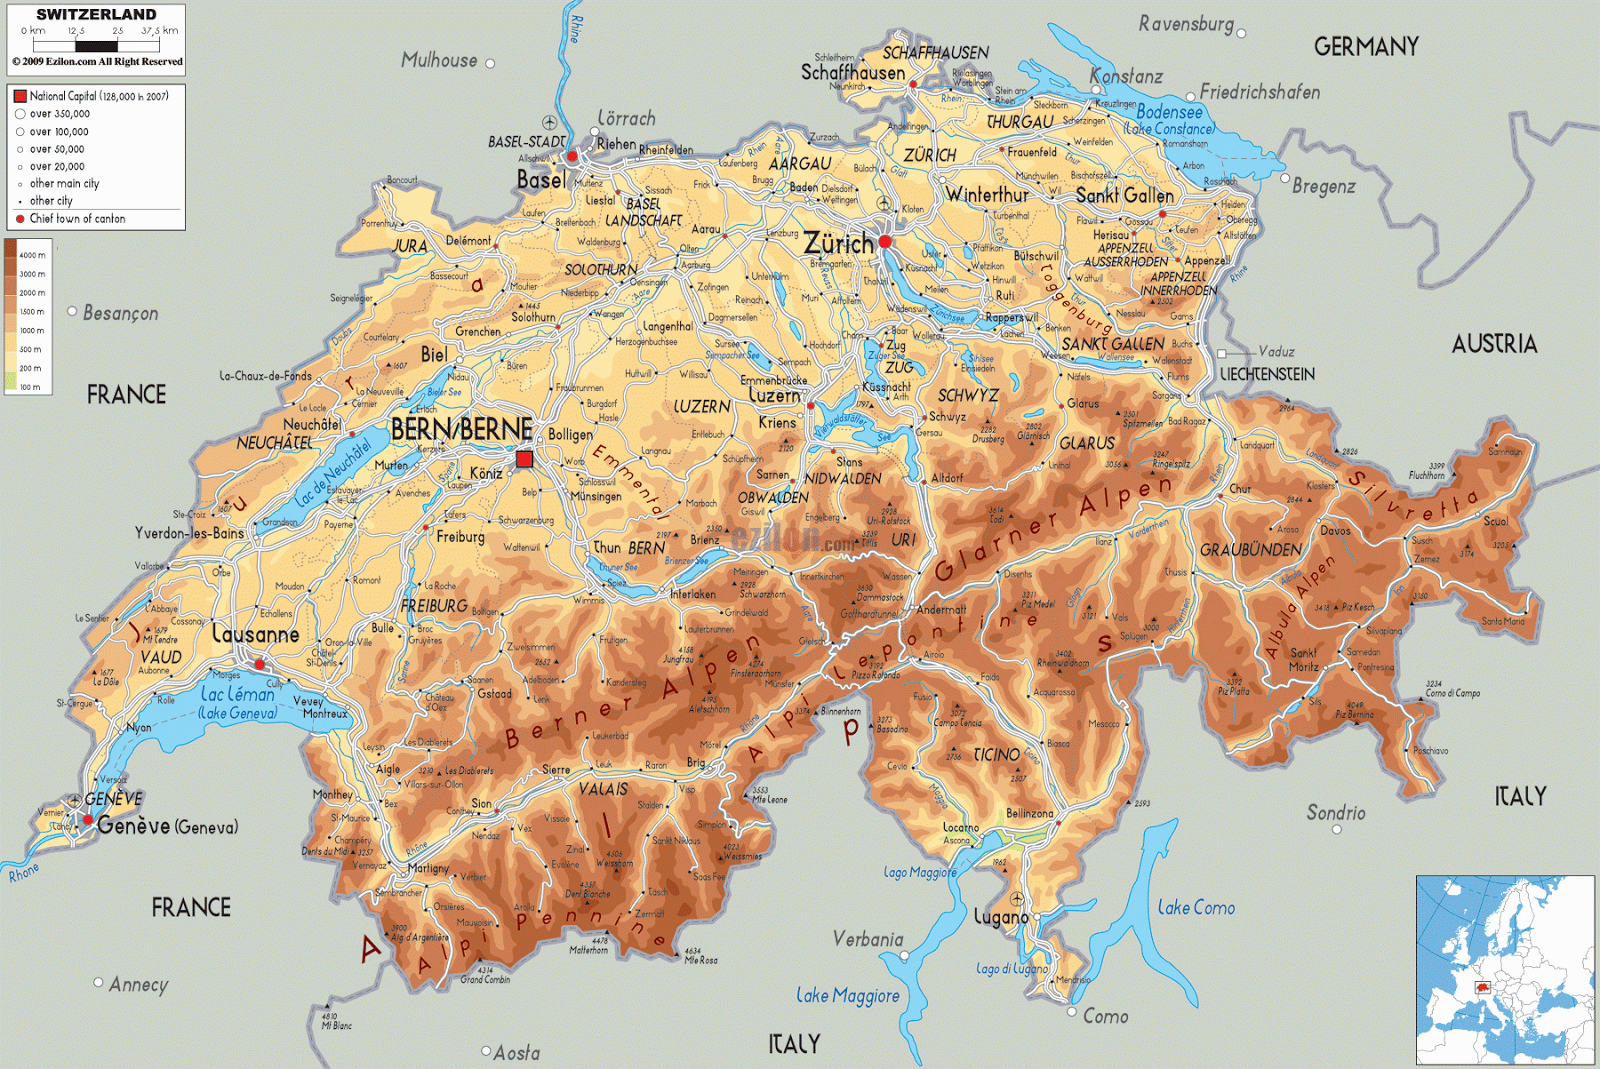 MAPS OF SWITZERLAND